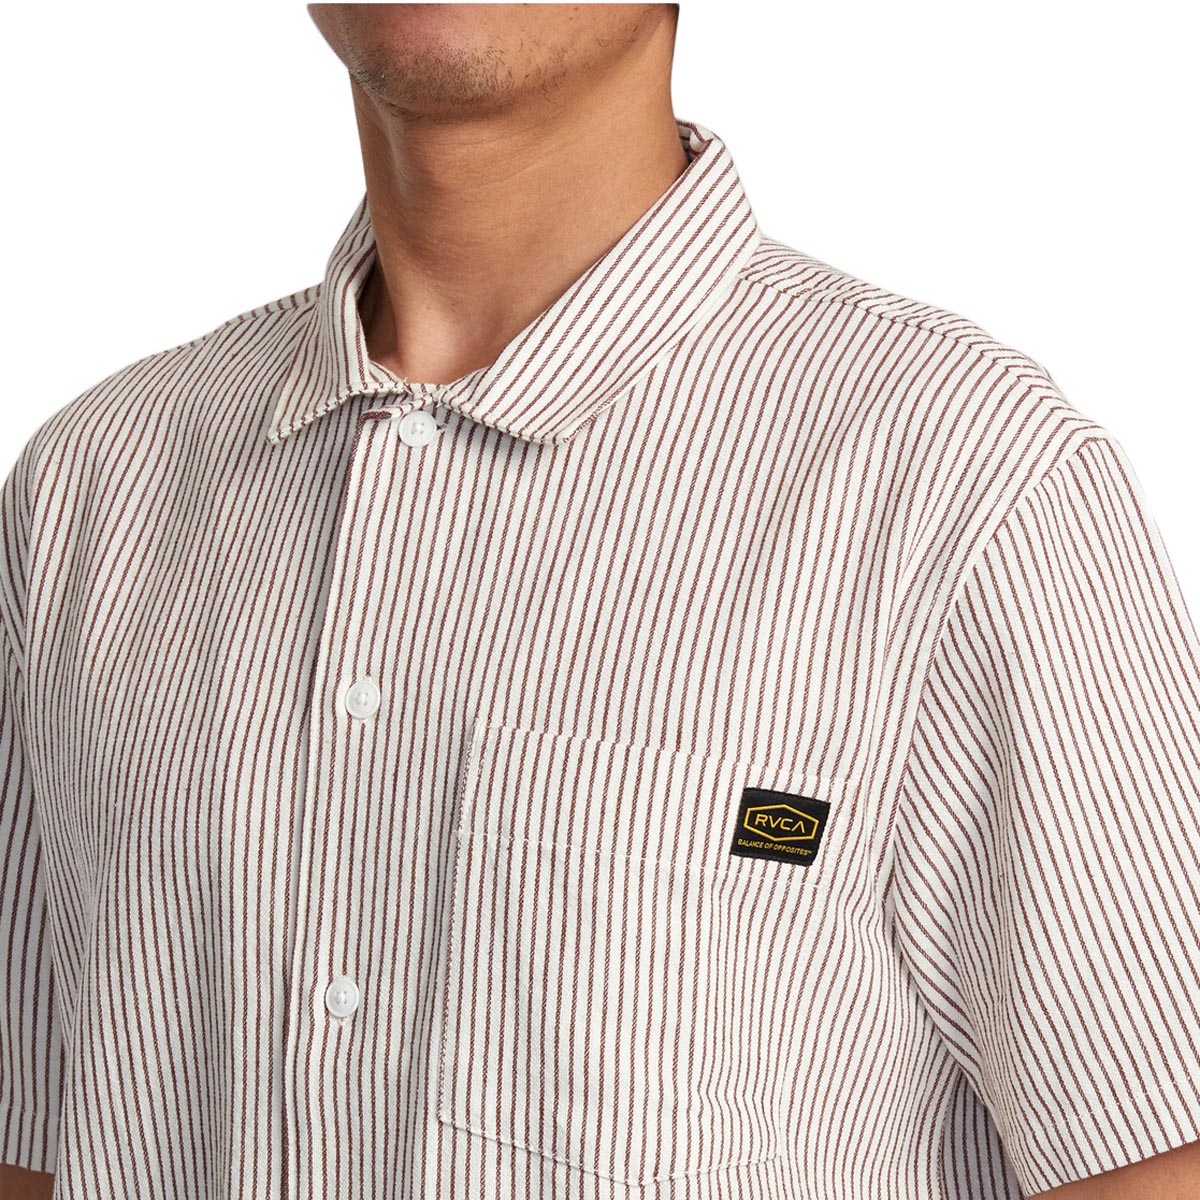 RVCA Dayshift Stripe II Shirt - Natural image 3